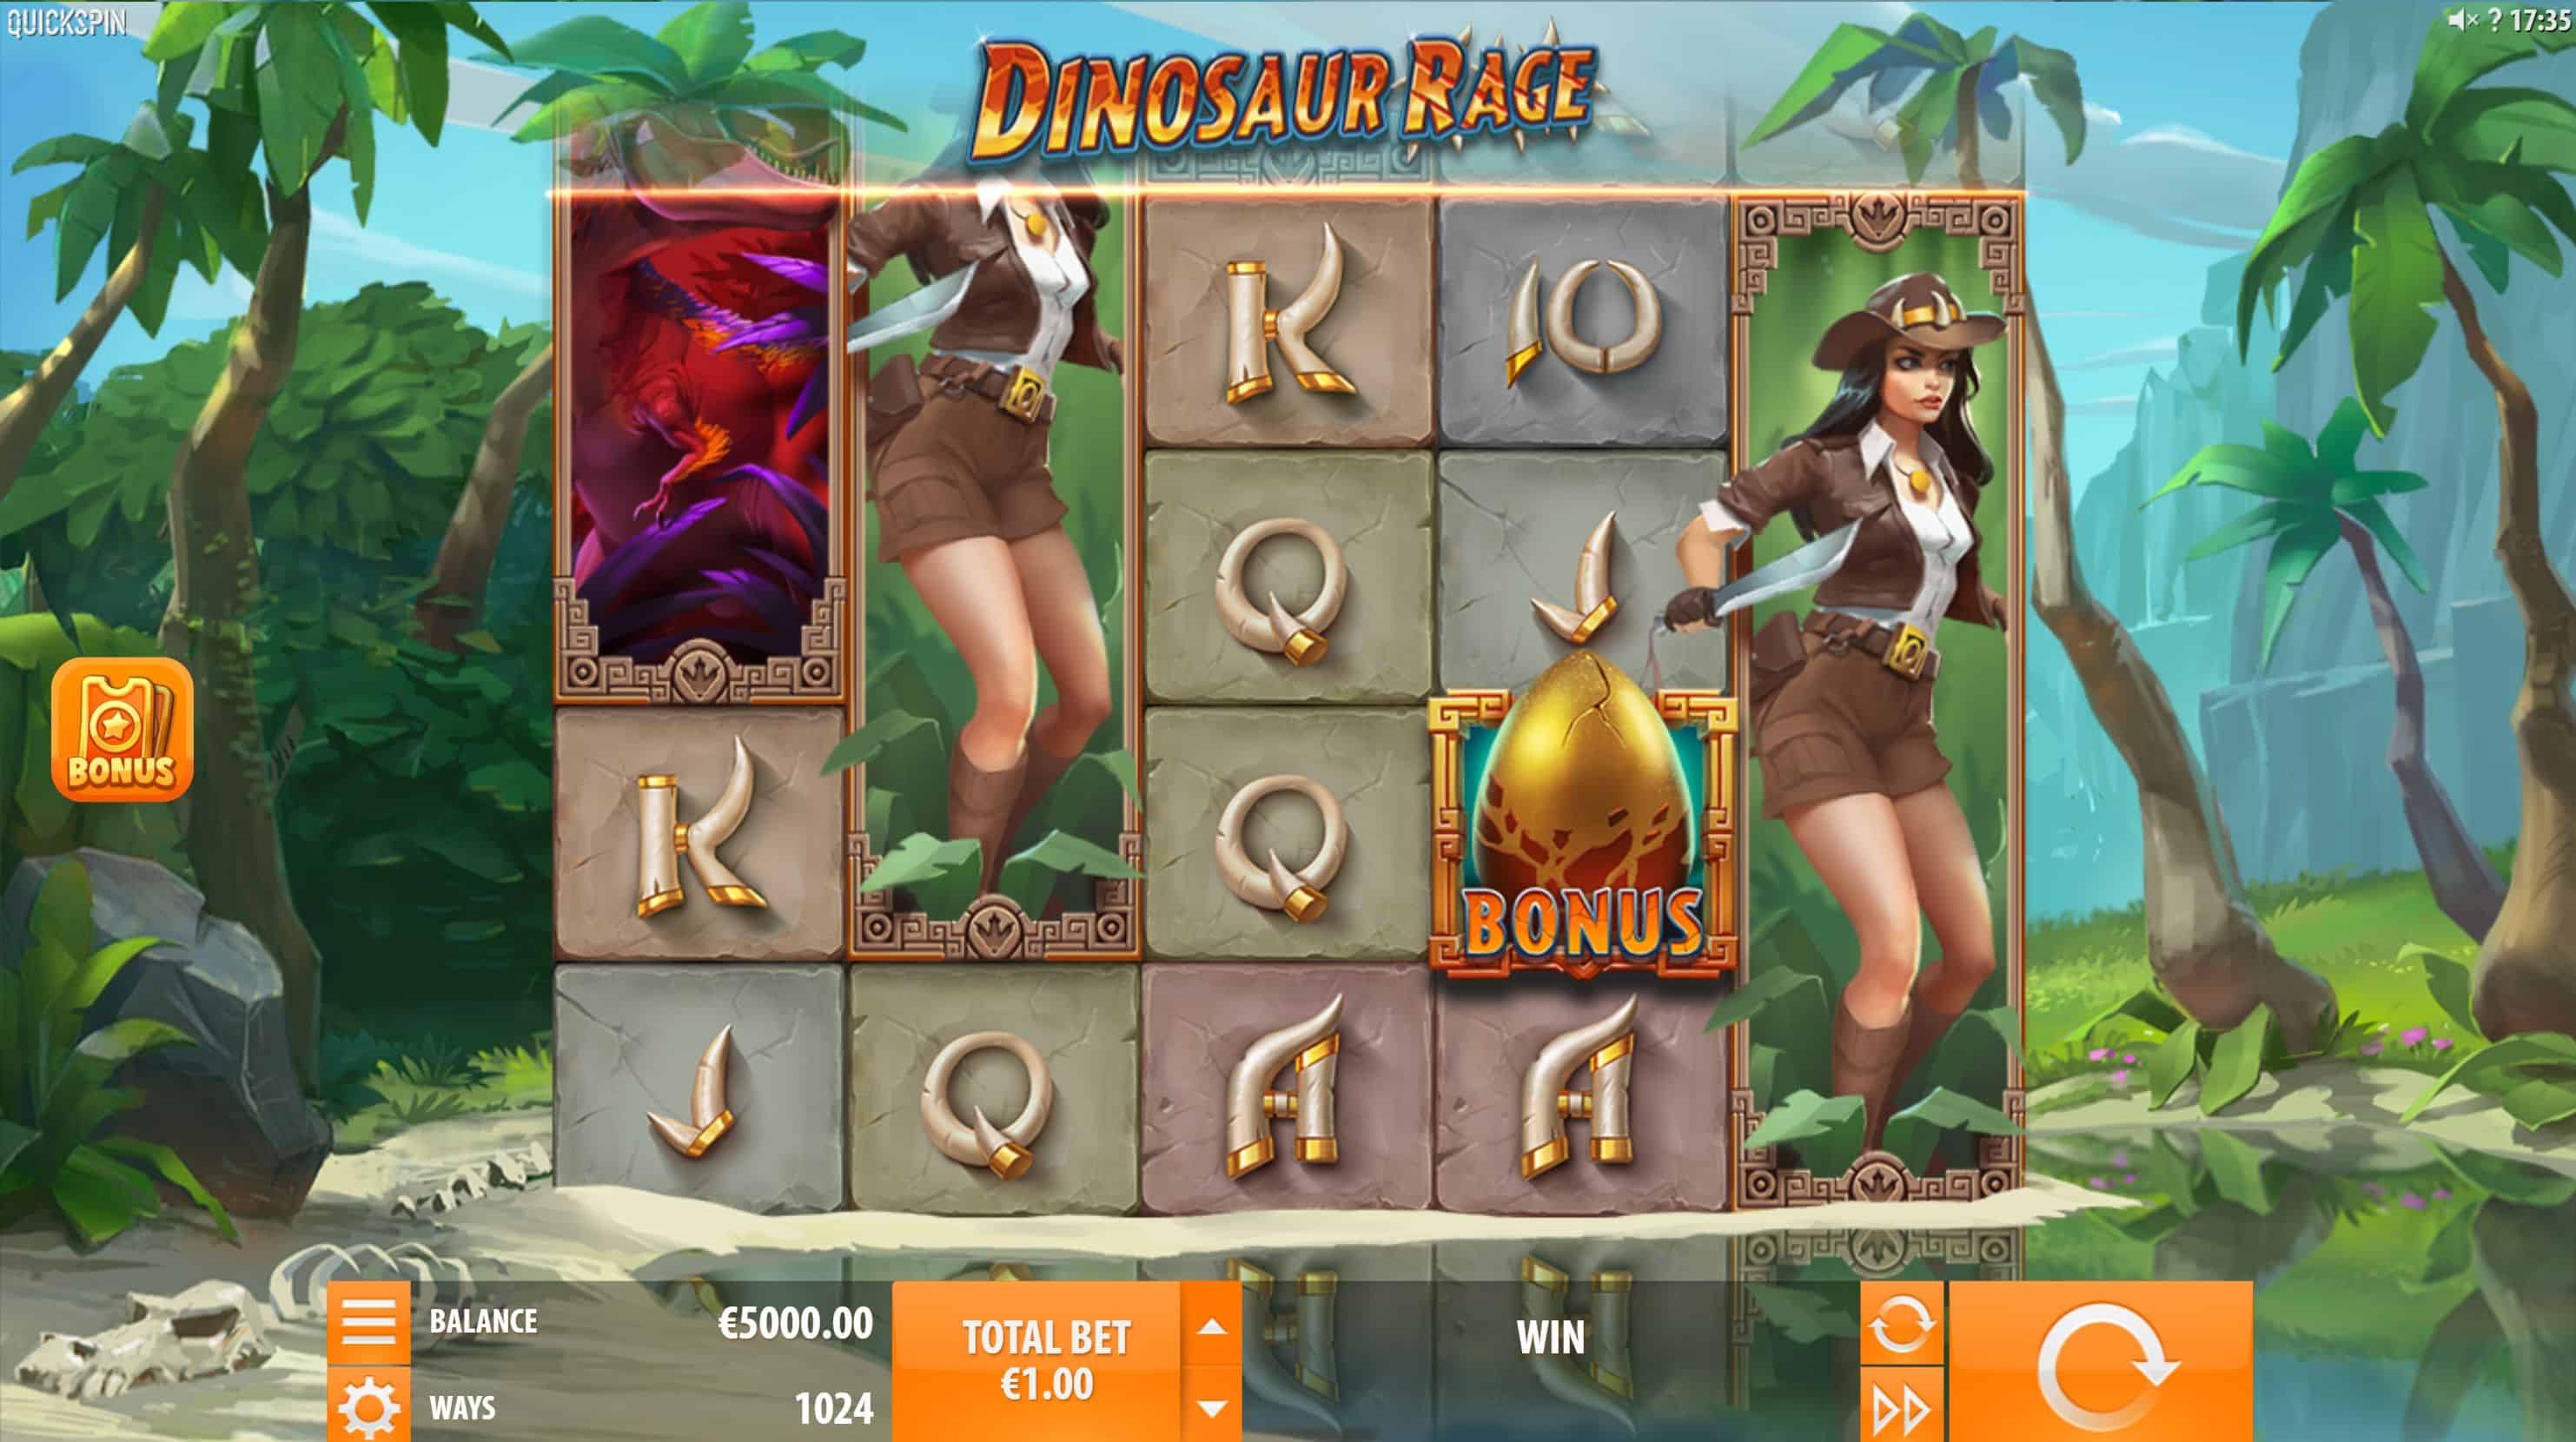 Dinosaur Rage Slot Game Free Play at Casino Ireland 01